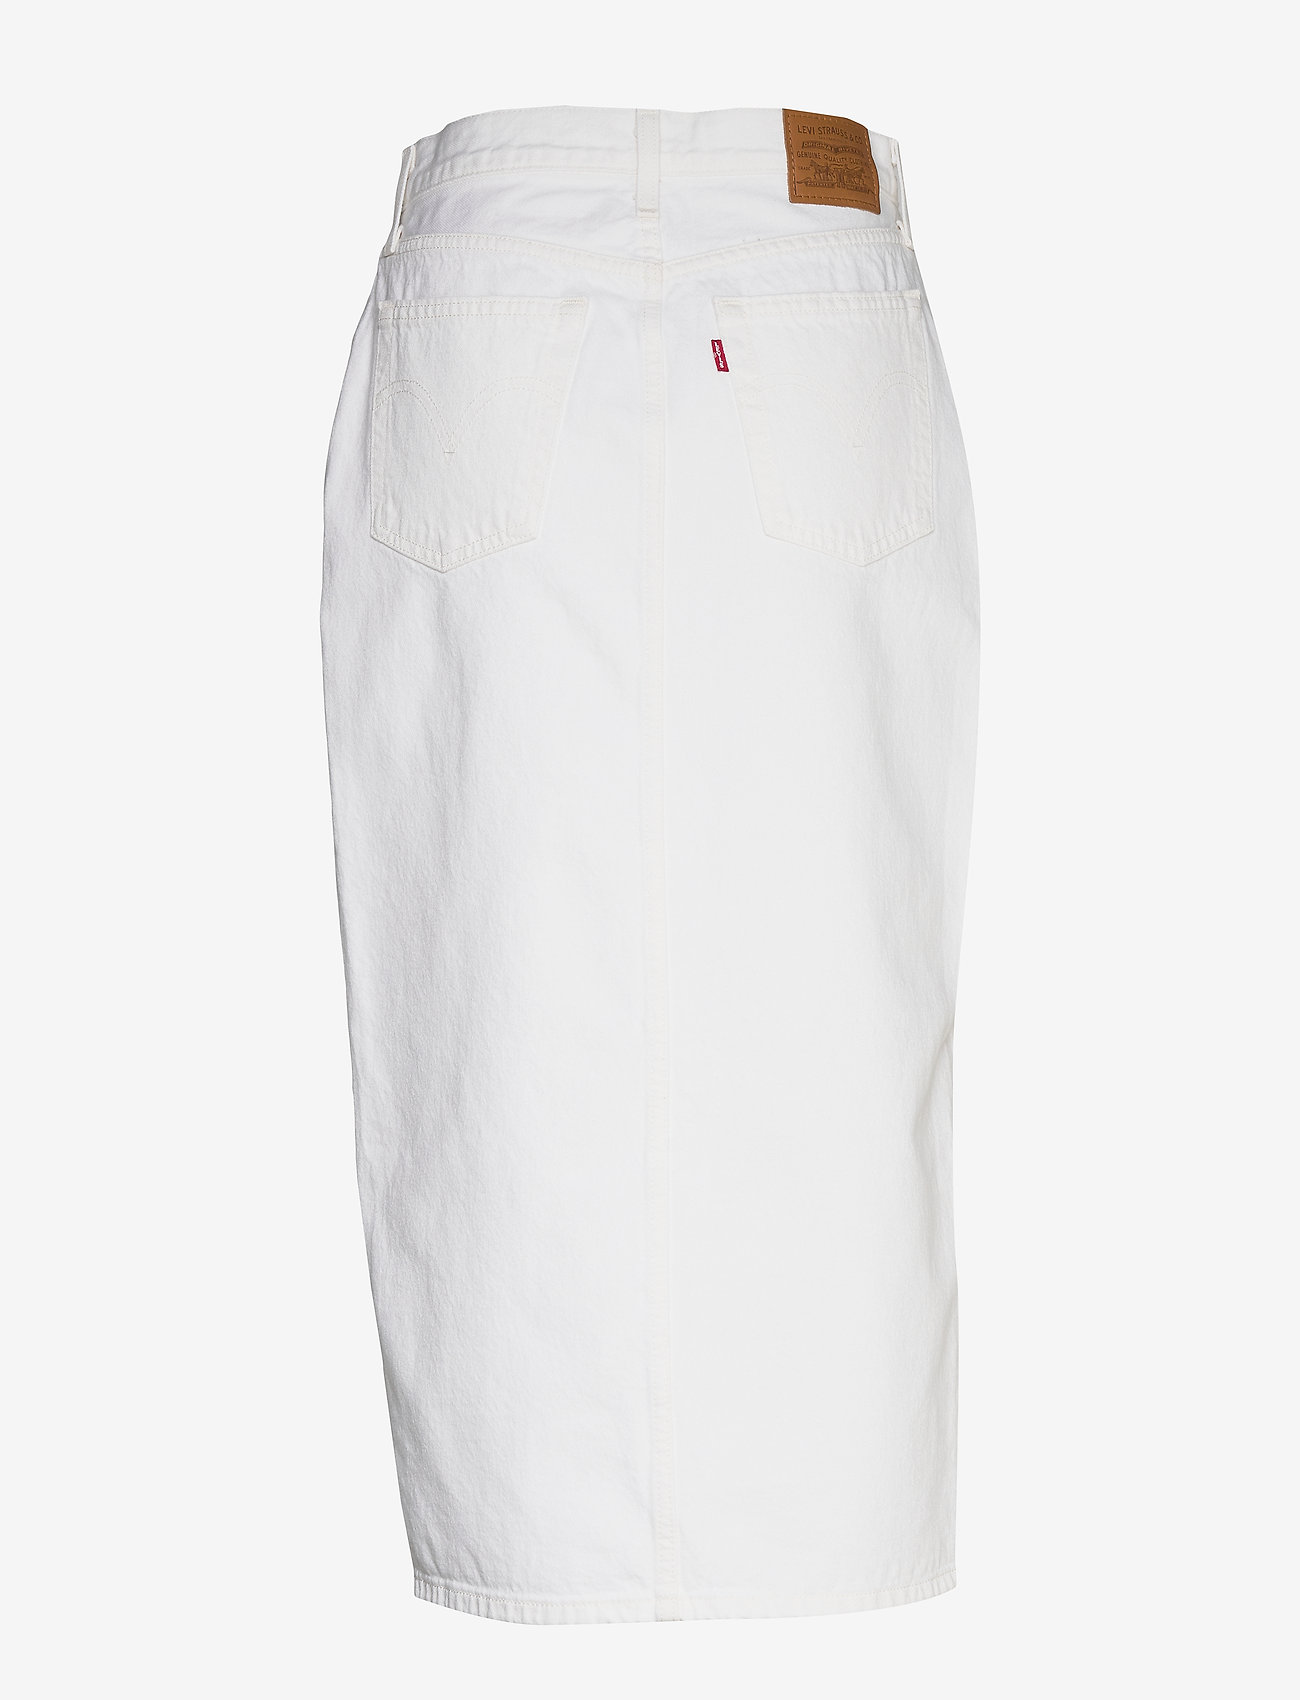 levi's white denim skirt